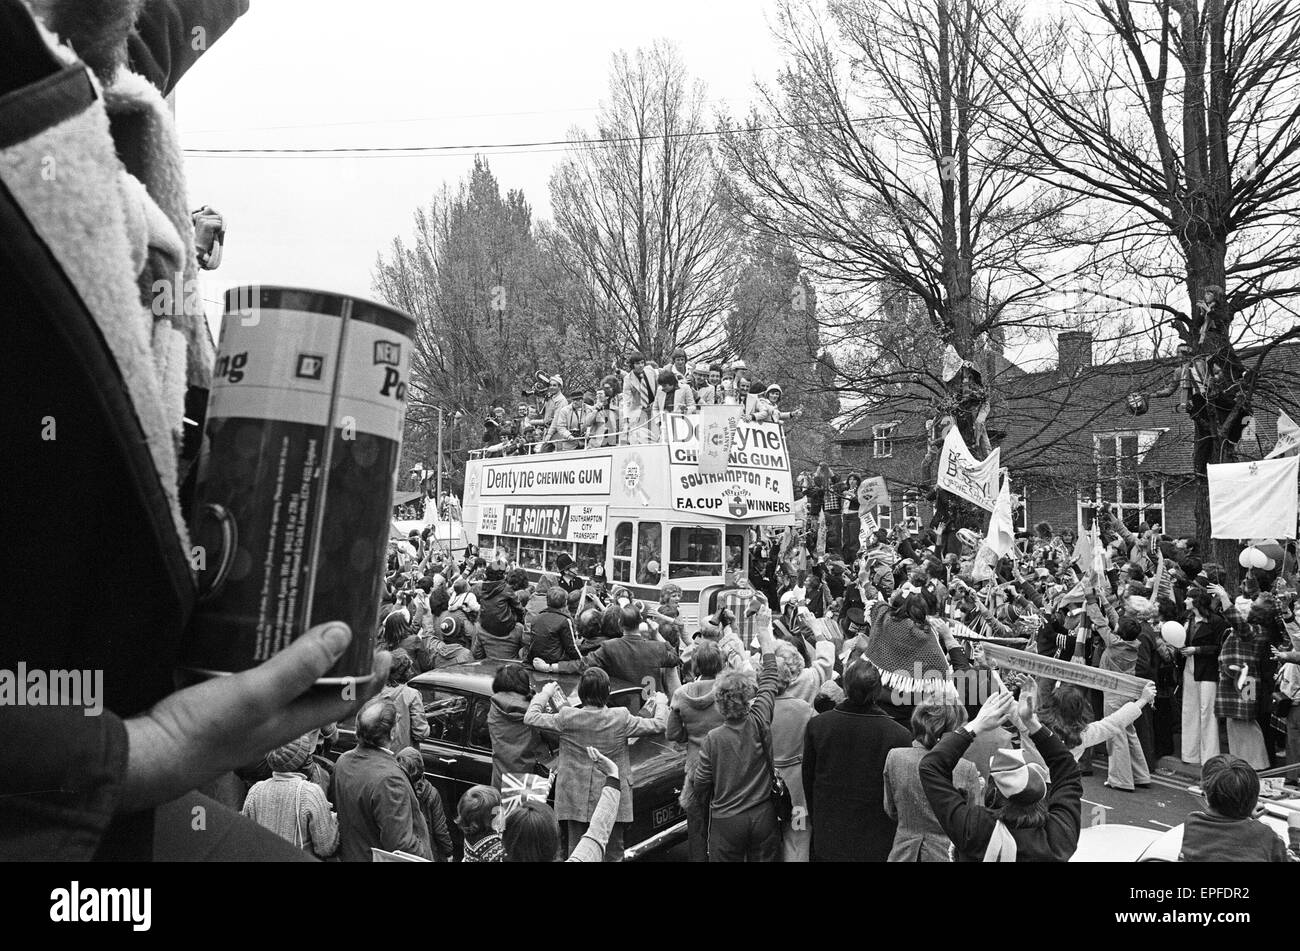 Southampton 1-0 Manchester United. Öffnen Sie oben Parade in Southampton nach FA Cup Finale Sieg, Sonntag, 2. Mai 1976. Stockfoto